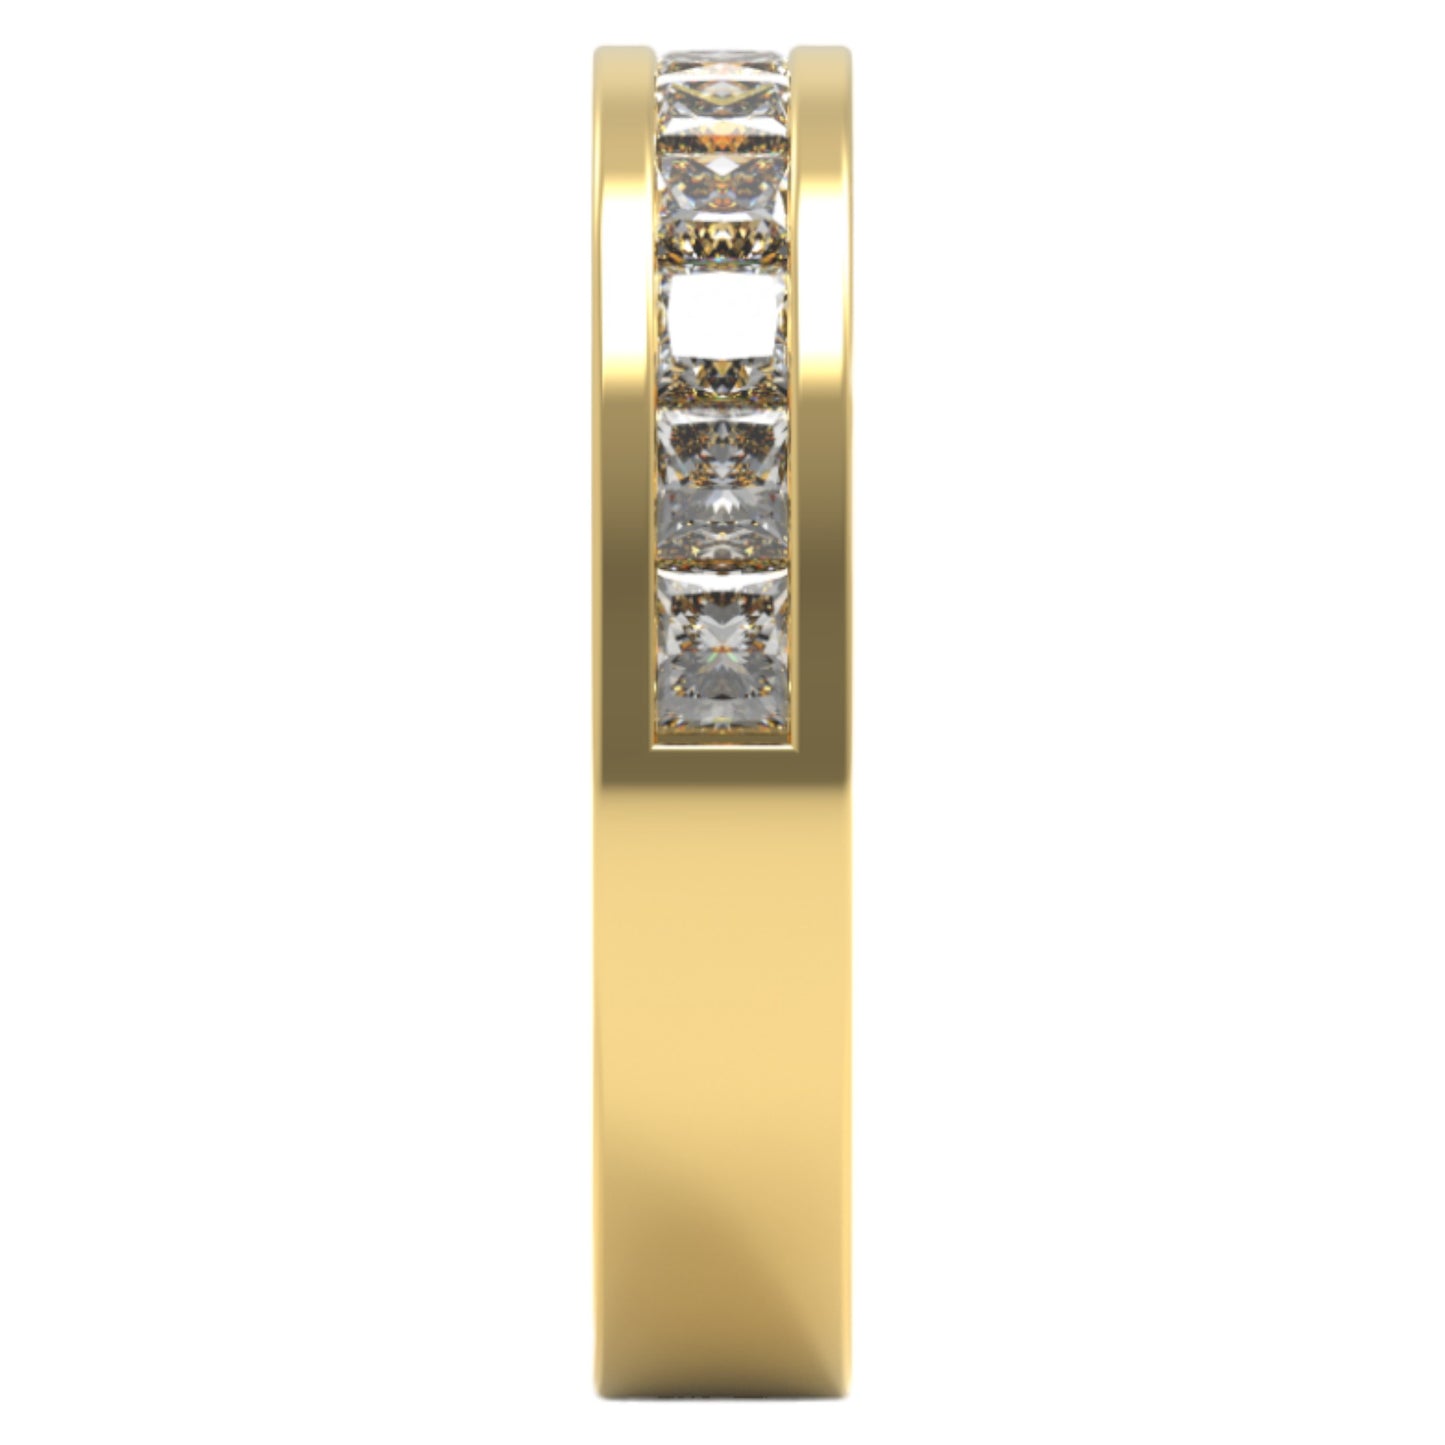 Elegant 14K Yellow Gold 0.50 Ct Princess Cut Diamond Wedding Band - Size 5.5